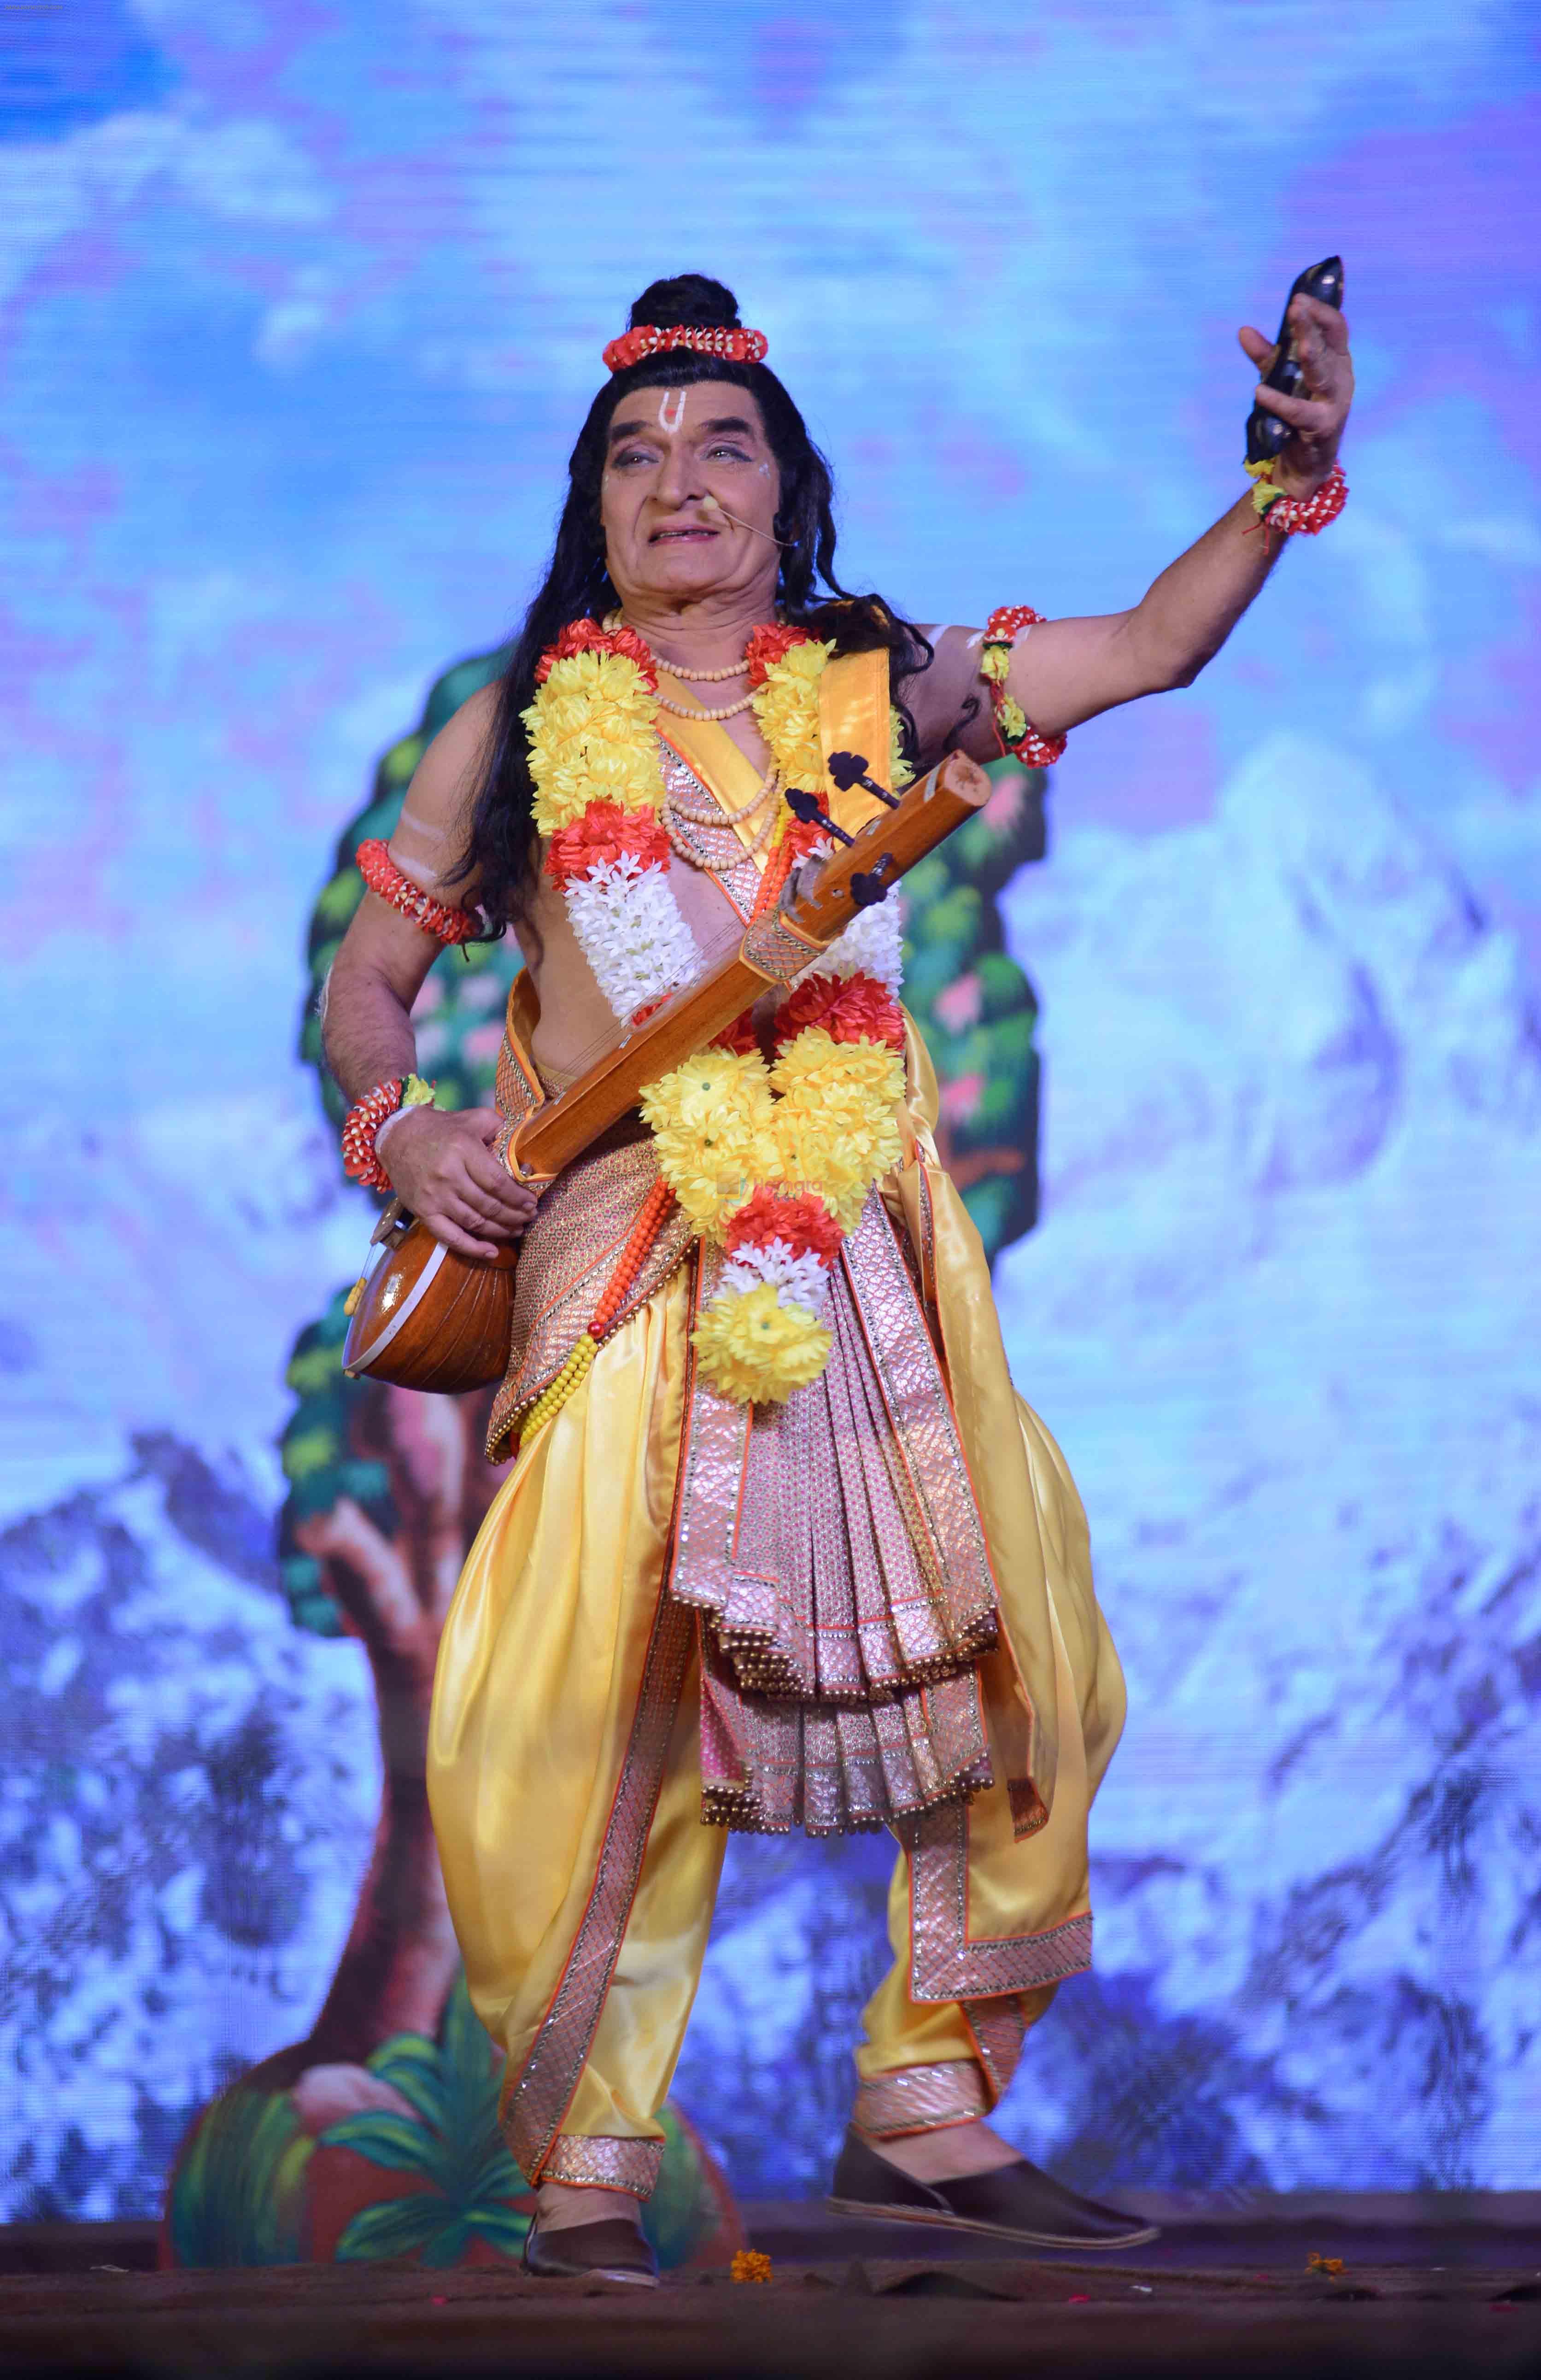 Asrani -Narad Munni Playing the Ram leela at Luv Kush ram Leela committee at Lal Qila maidan in Delhi on 13th Oct 2015